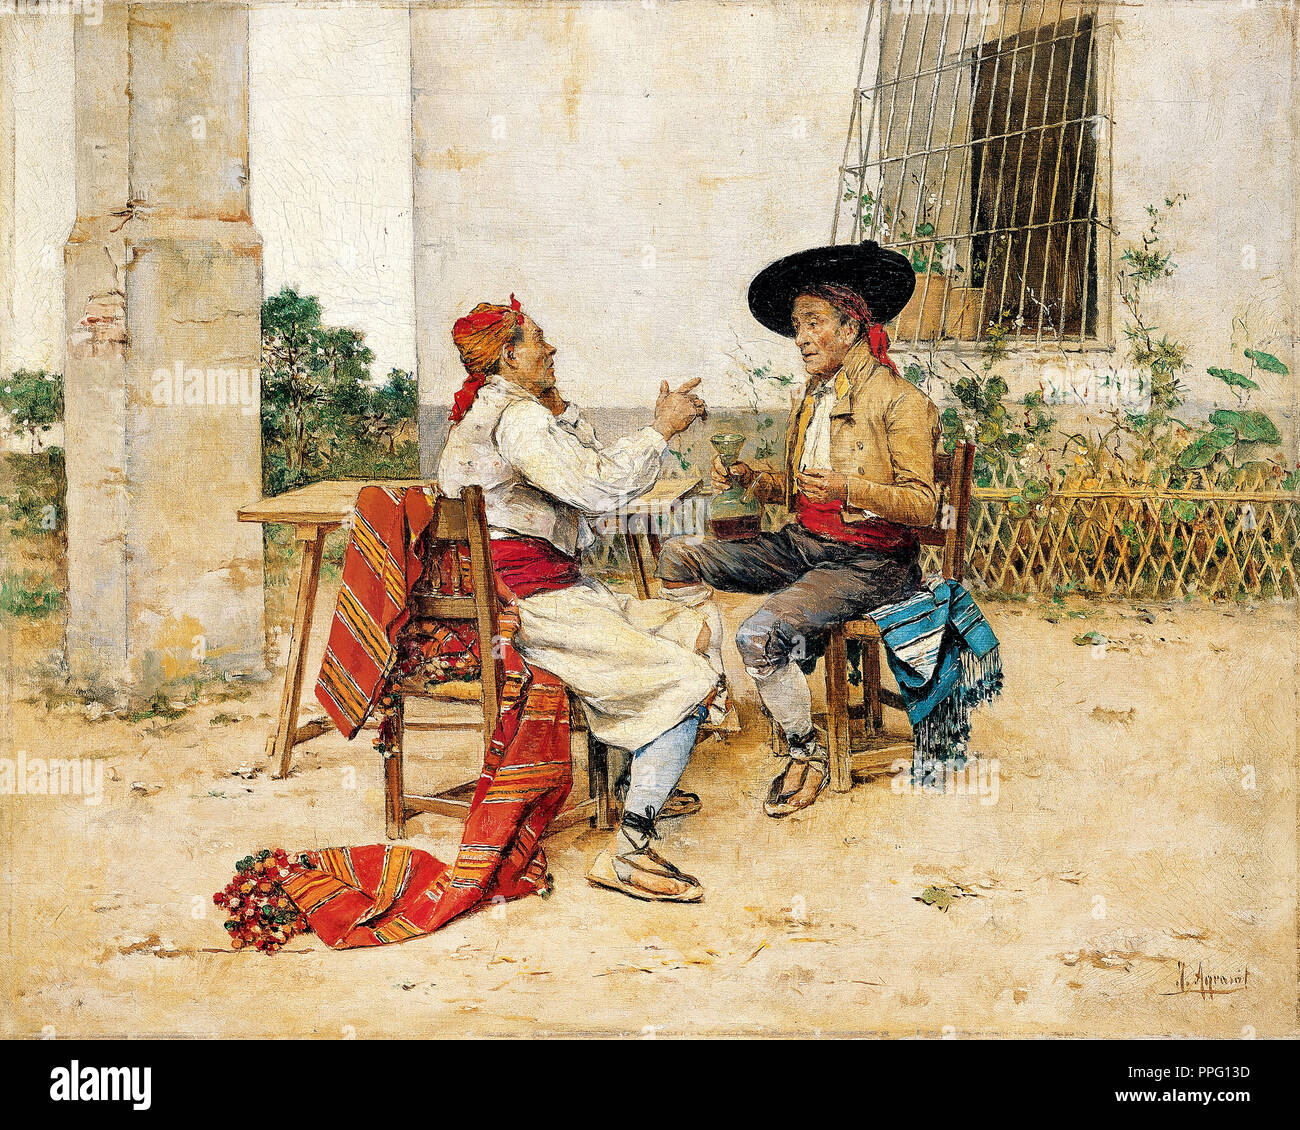 Arthur Devis - Two Inhabitants of the Valencia Huerta (Drinking Wine) 1880 Oil on canvas. Fundacion Banco Santander, Madrid, Spain. Stock Photo